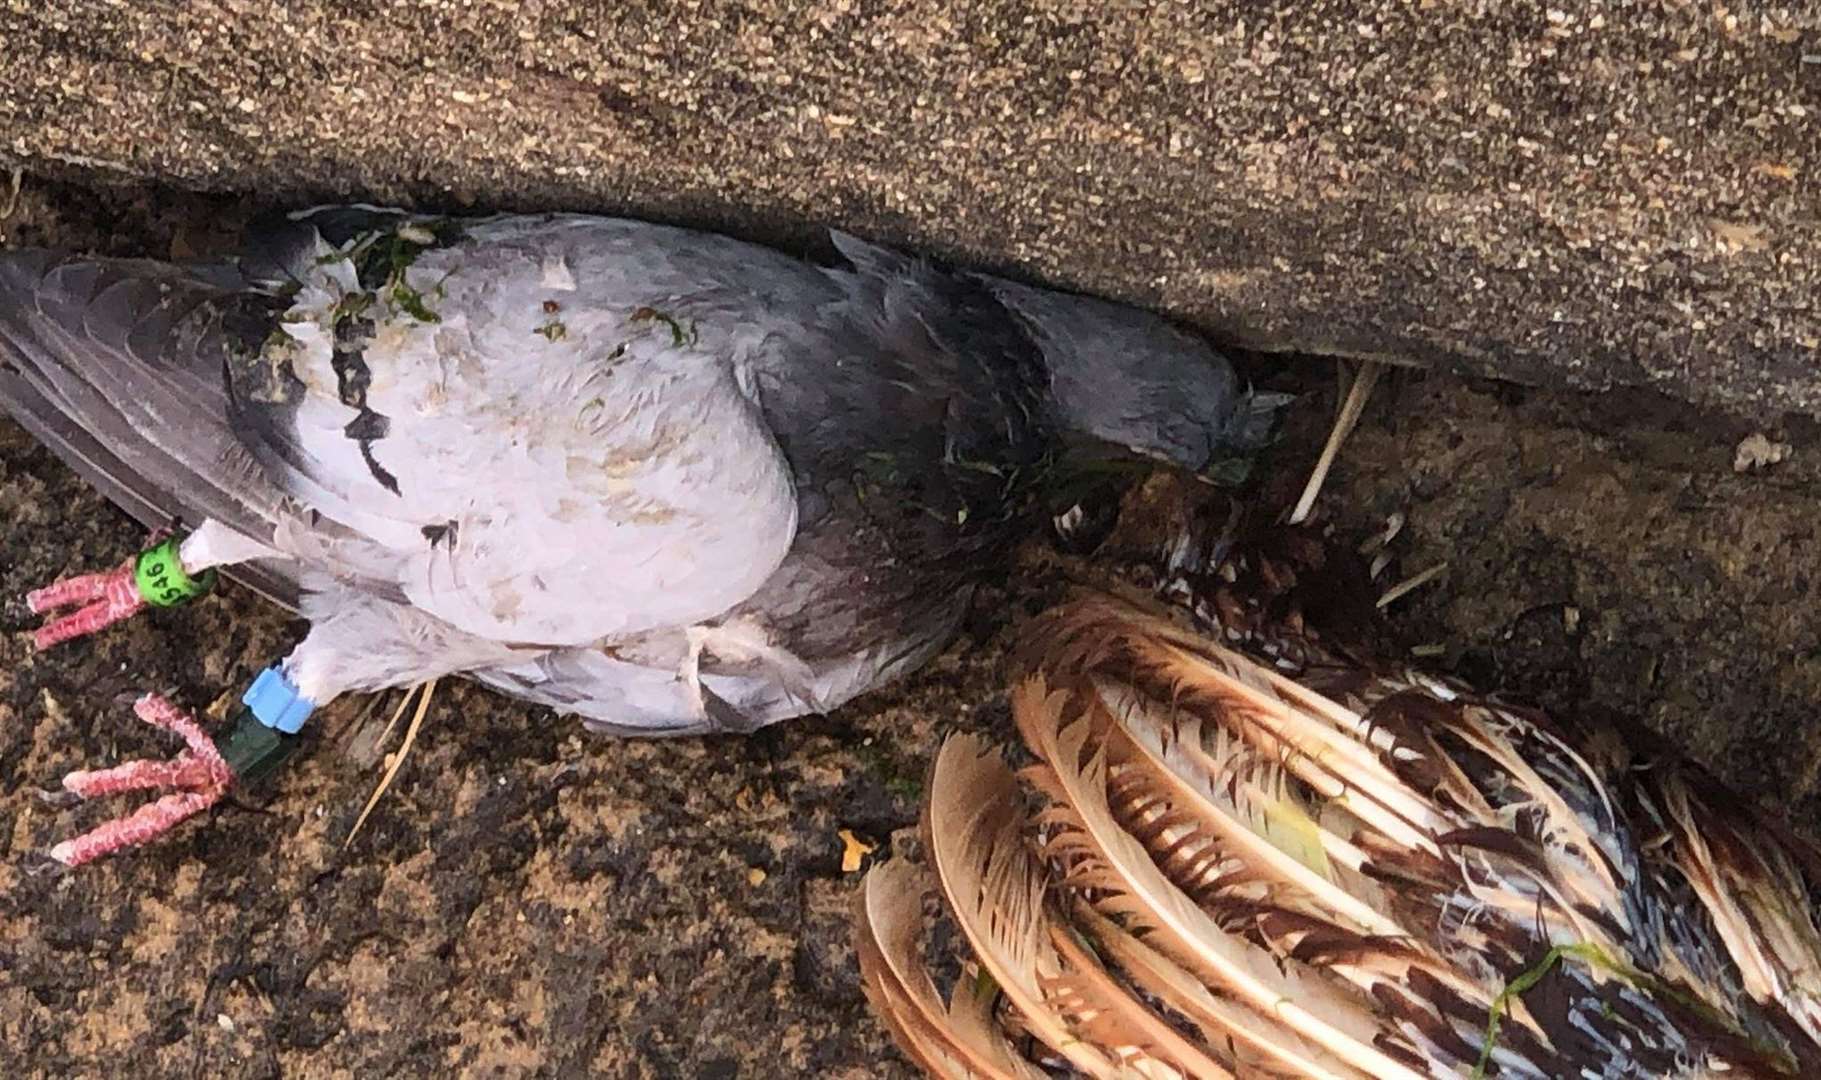 The racing pigeon had its throat cut